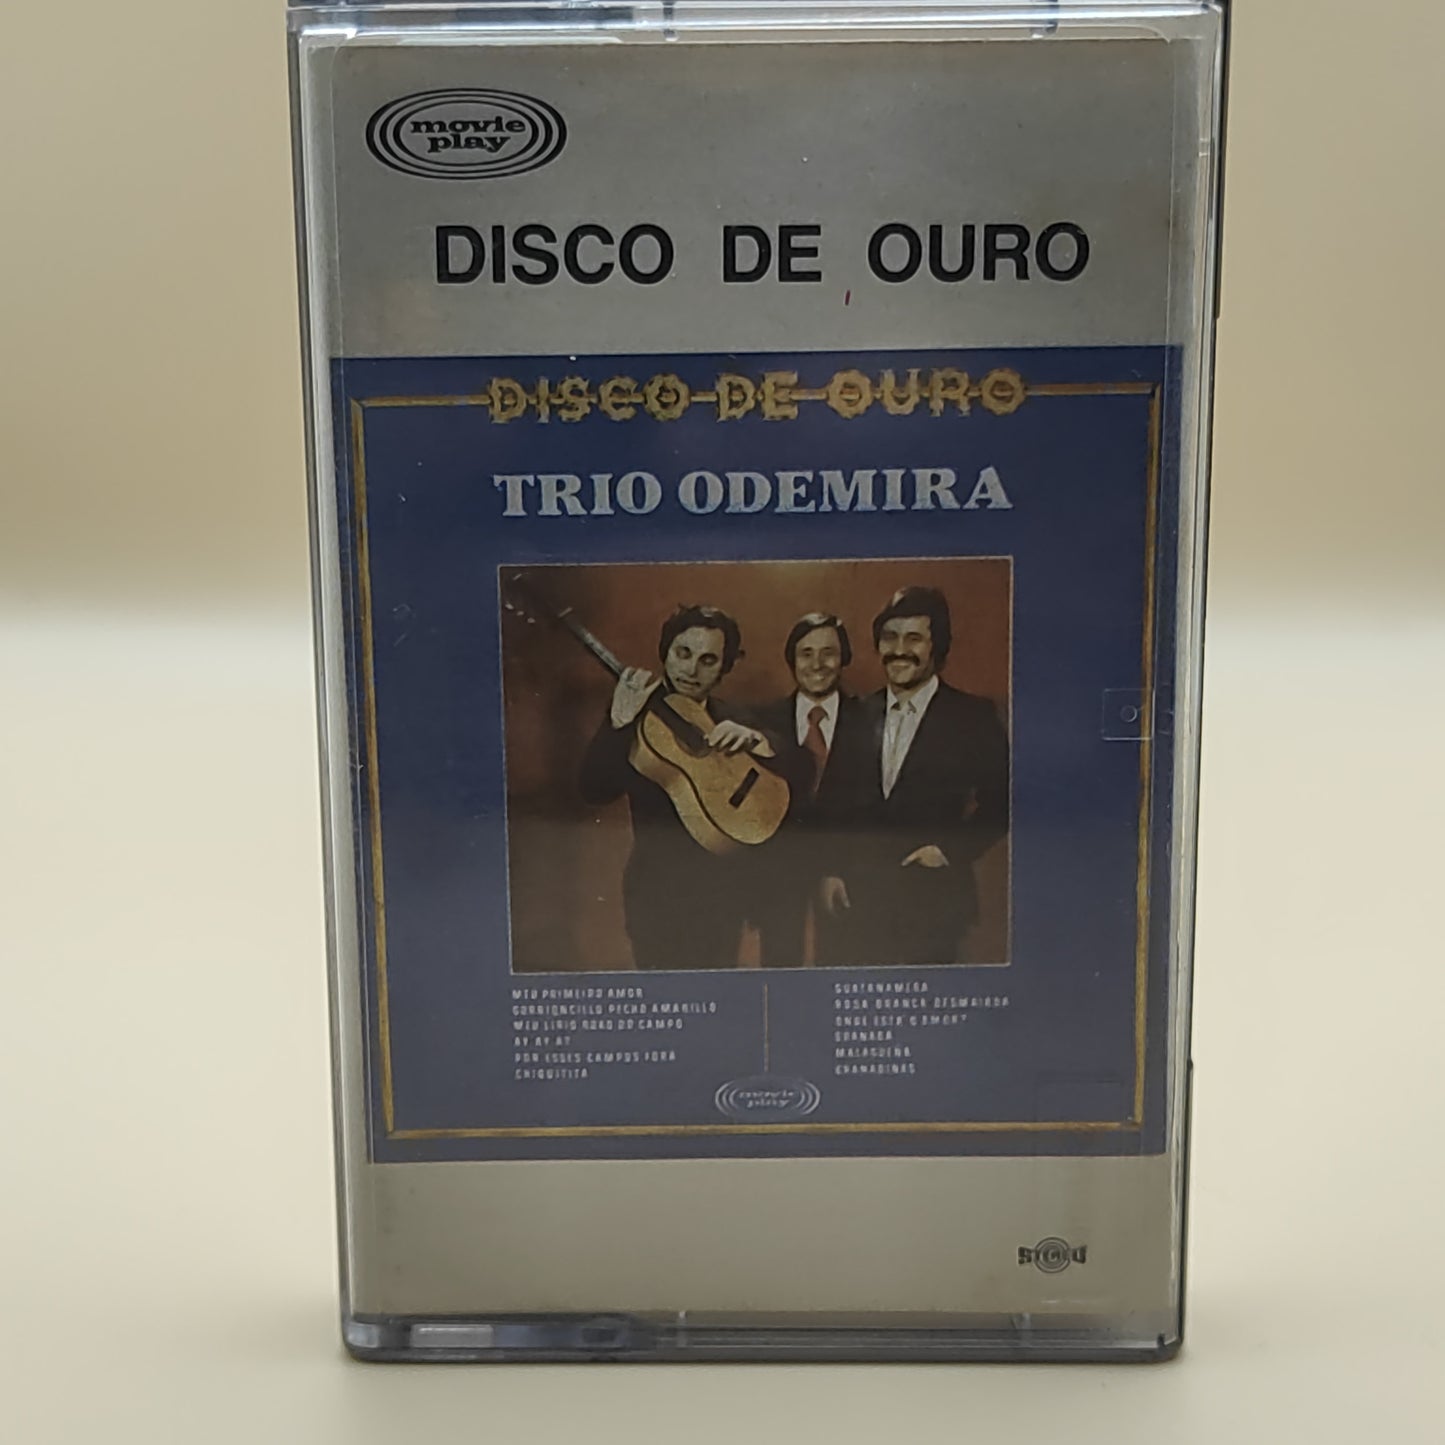 Trio de Odemira - Disco de ouro